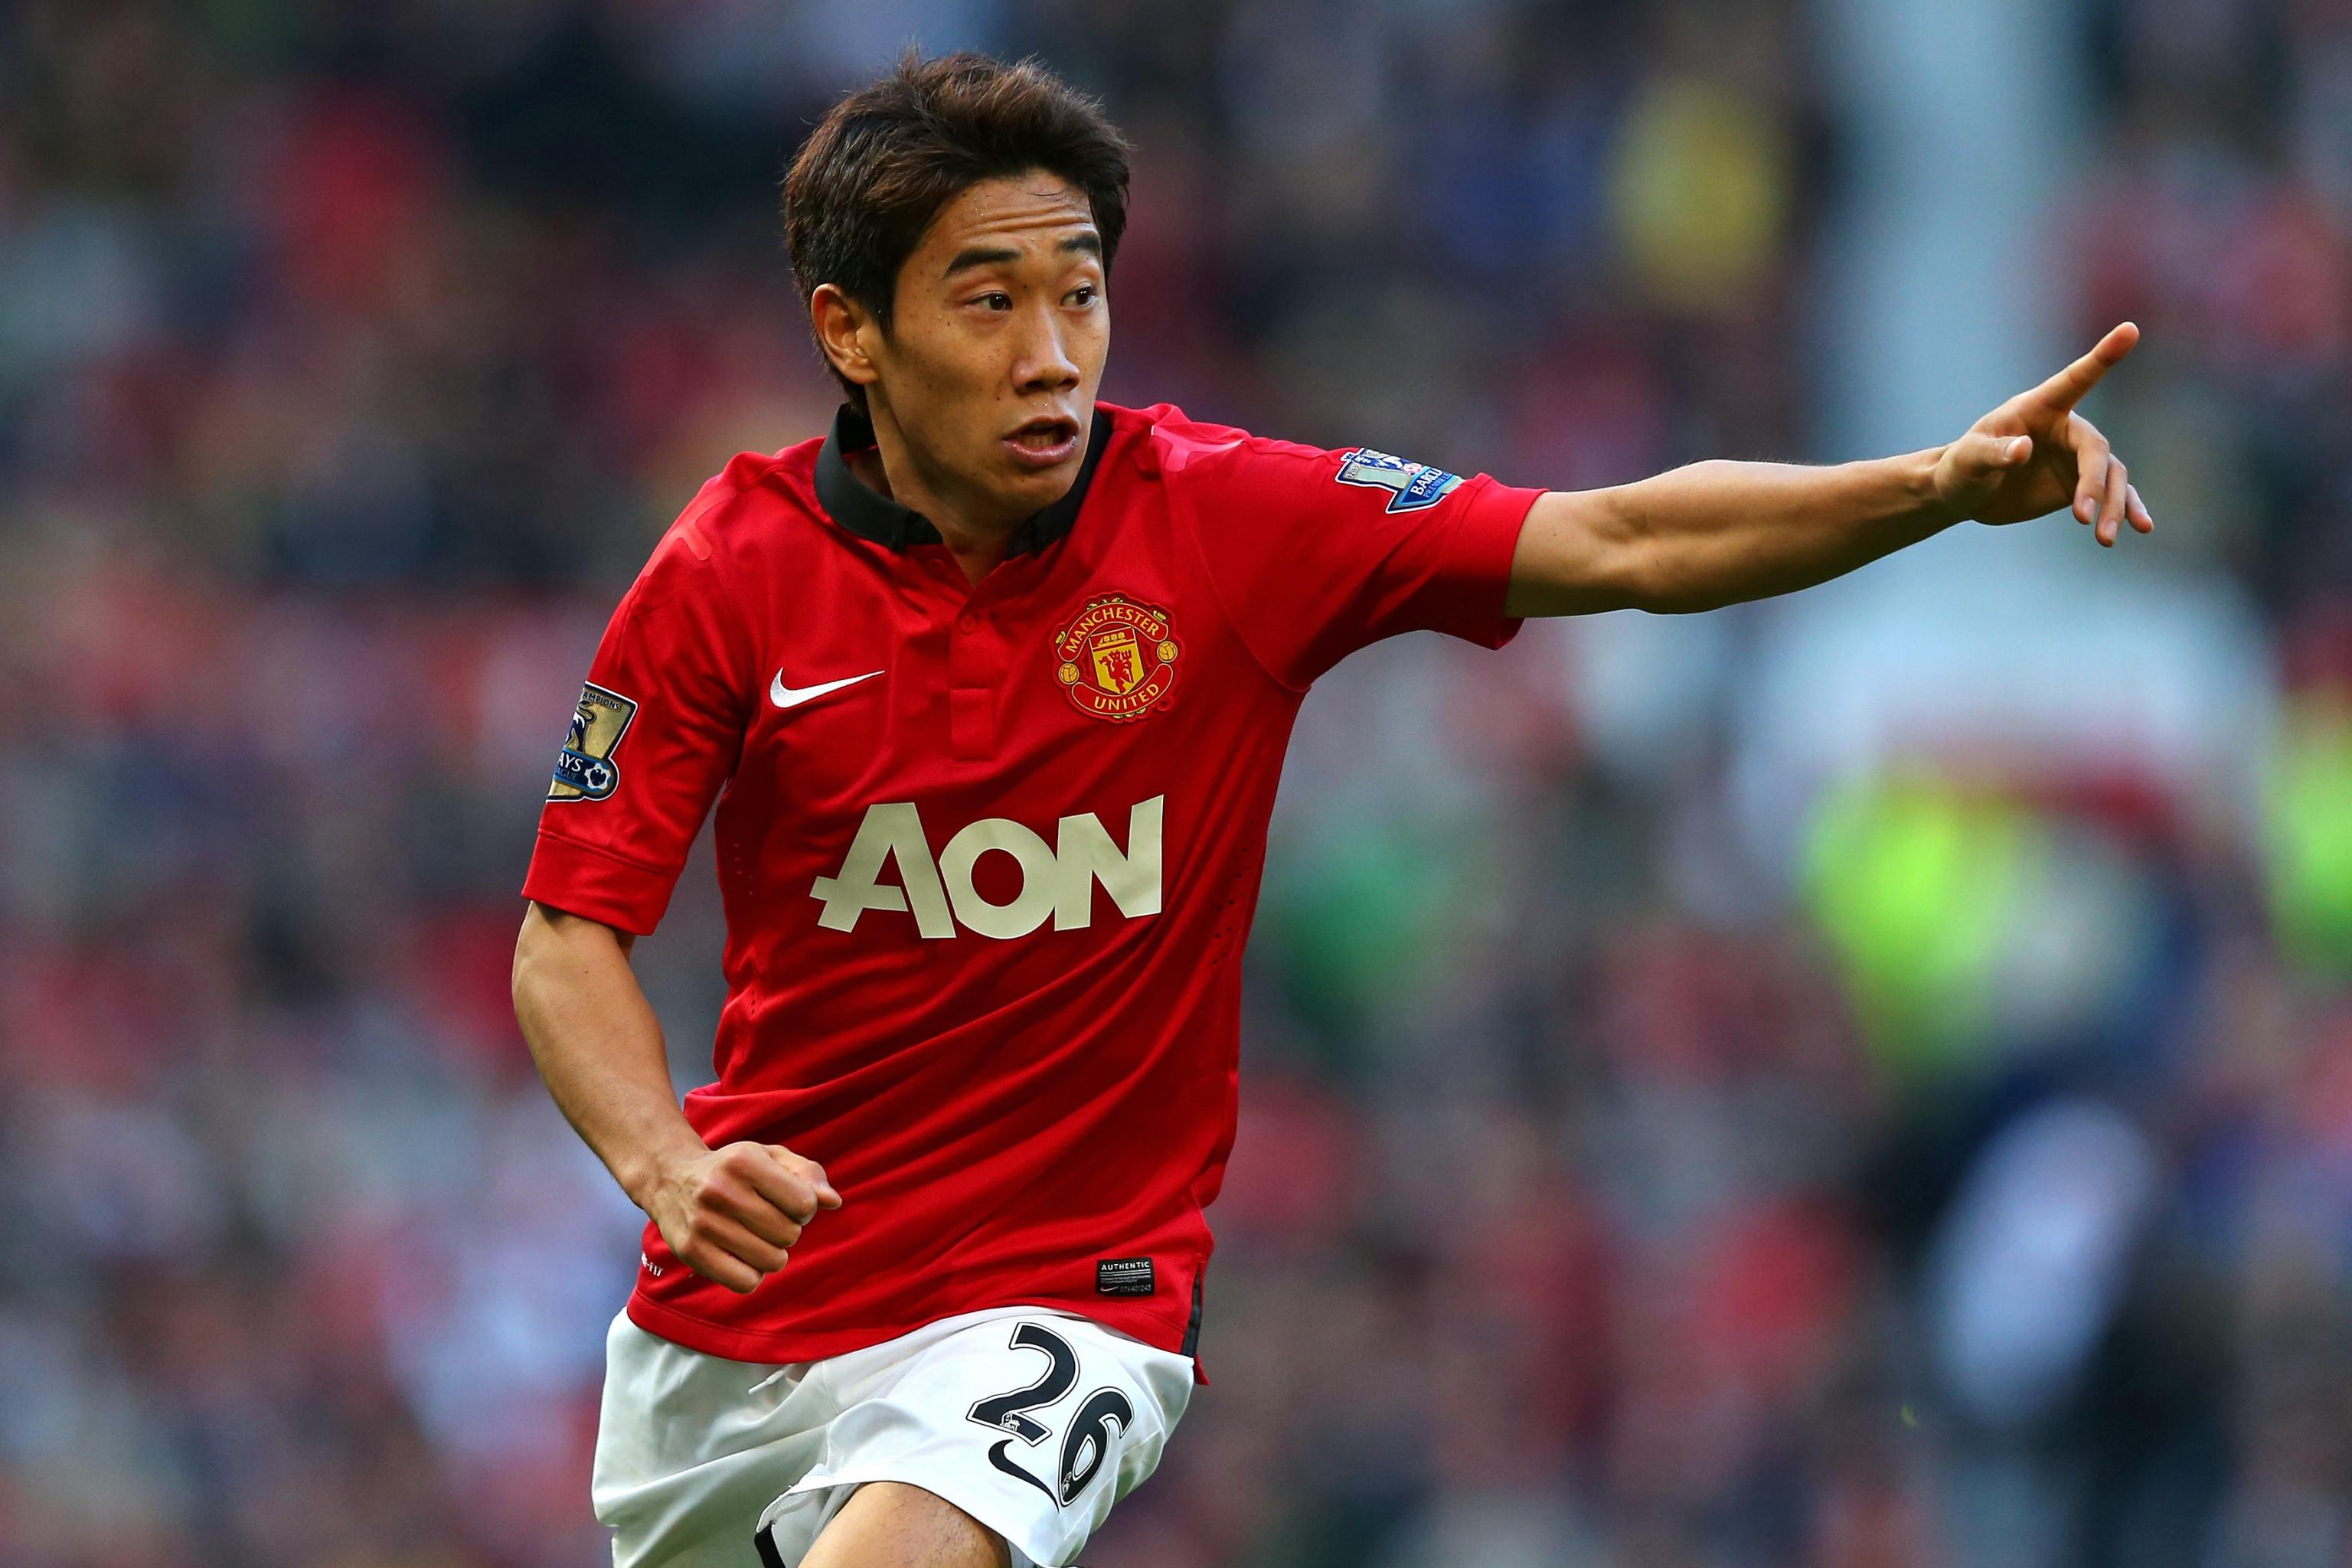 Manchester United SoccerStarz Blister Pack – Shinji Kagawa – Discounted